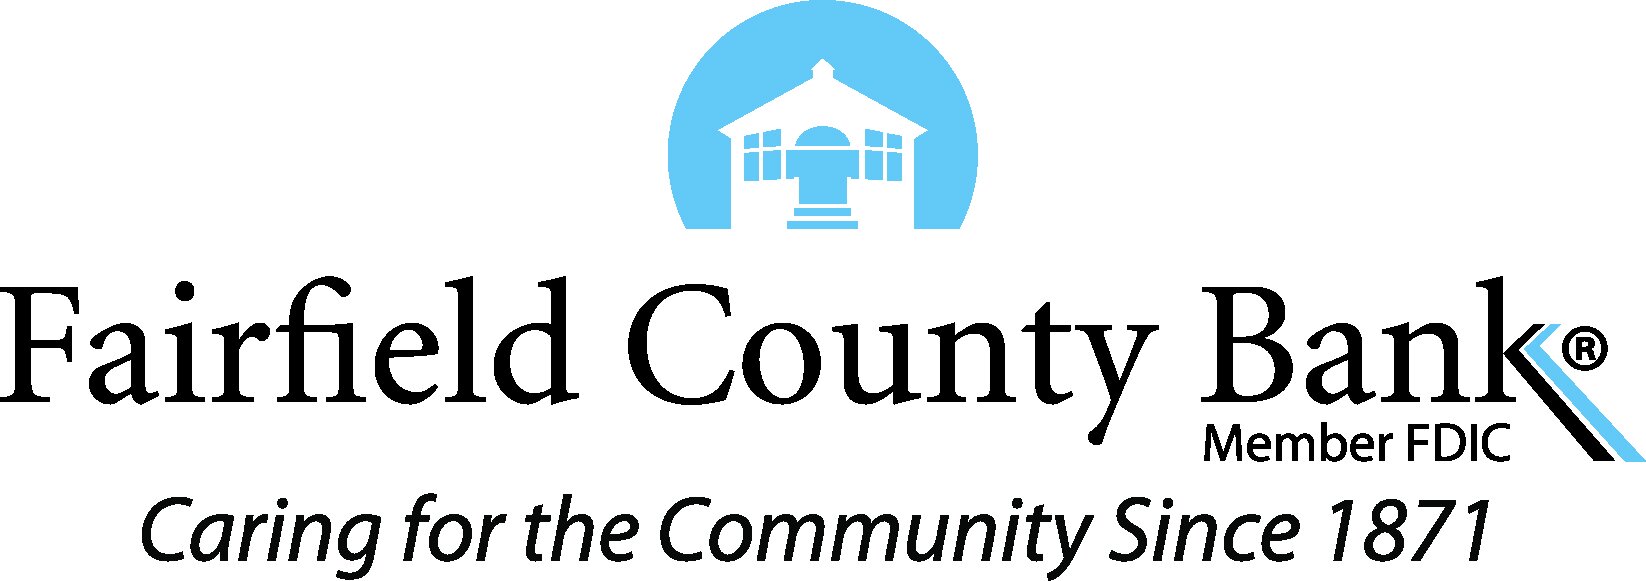 Fairfield County Bank preferred logo.jpg